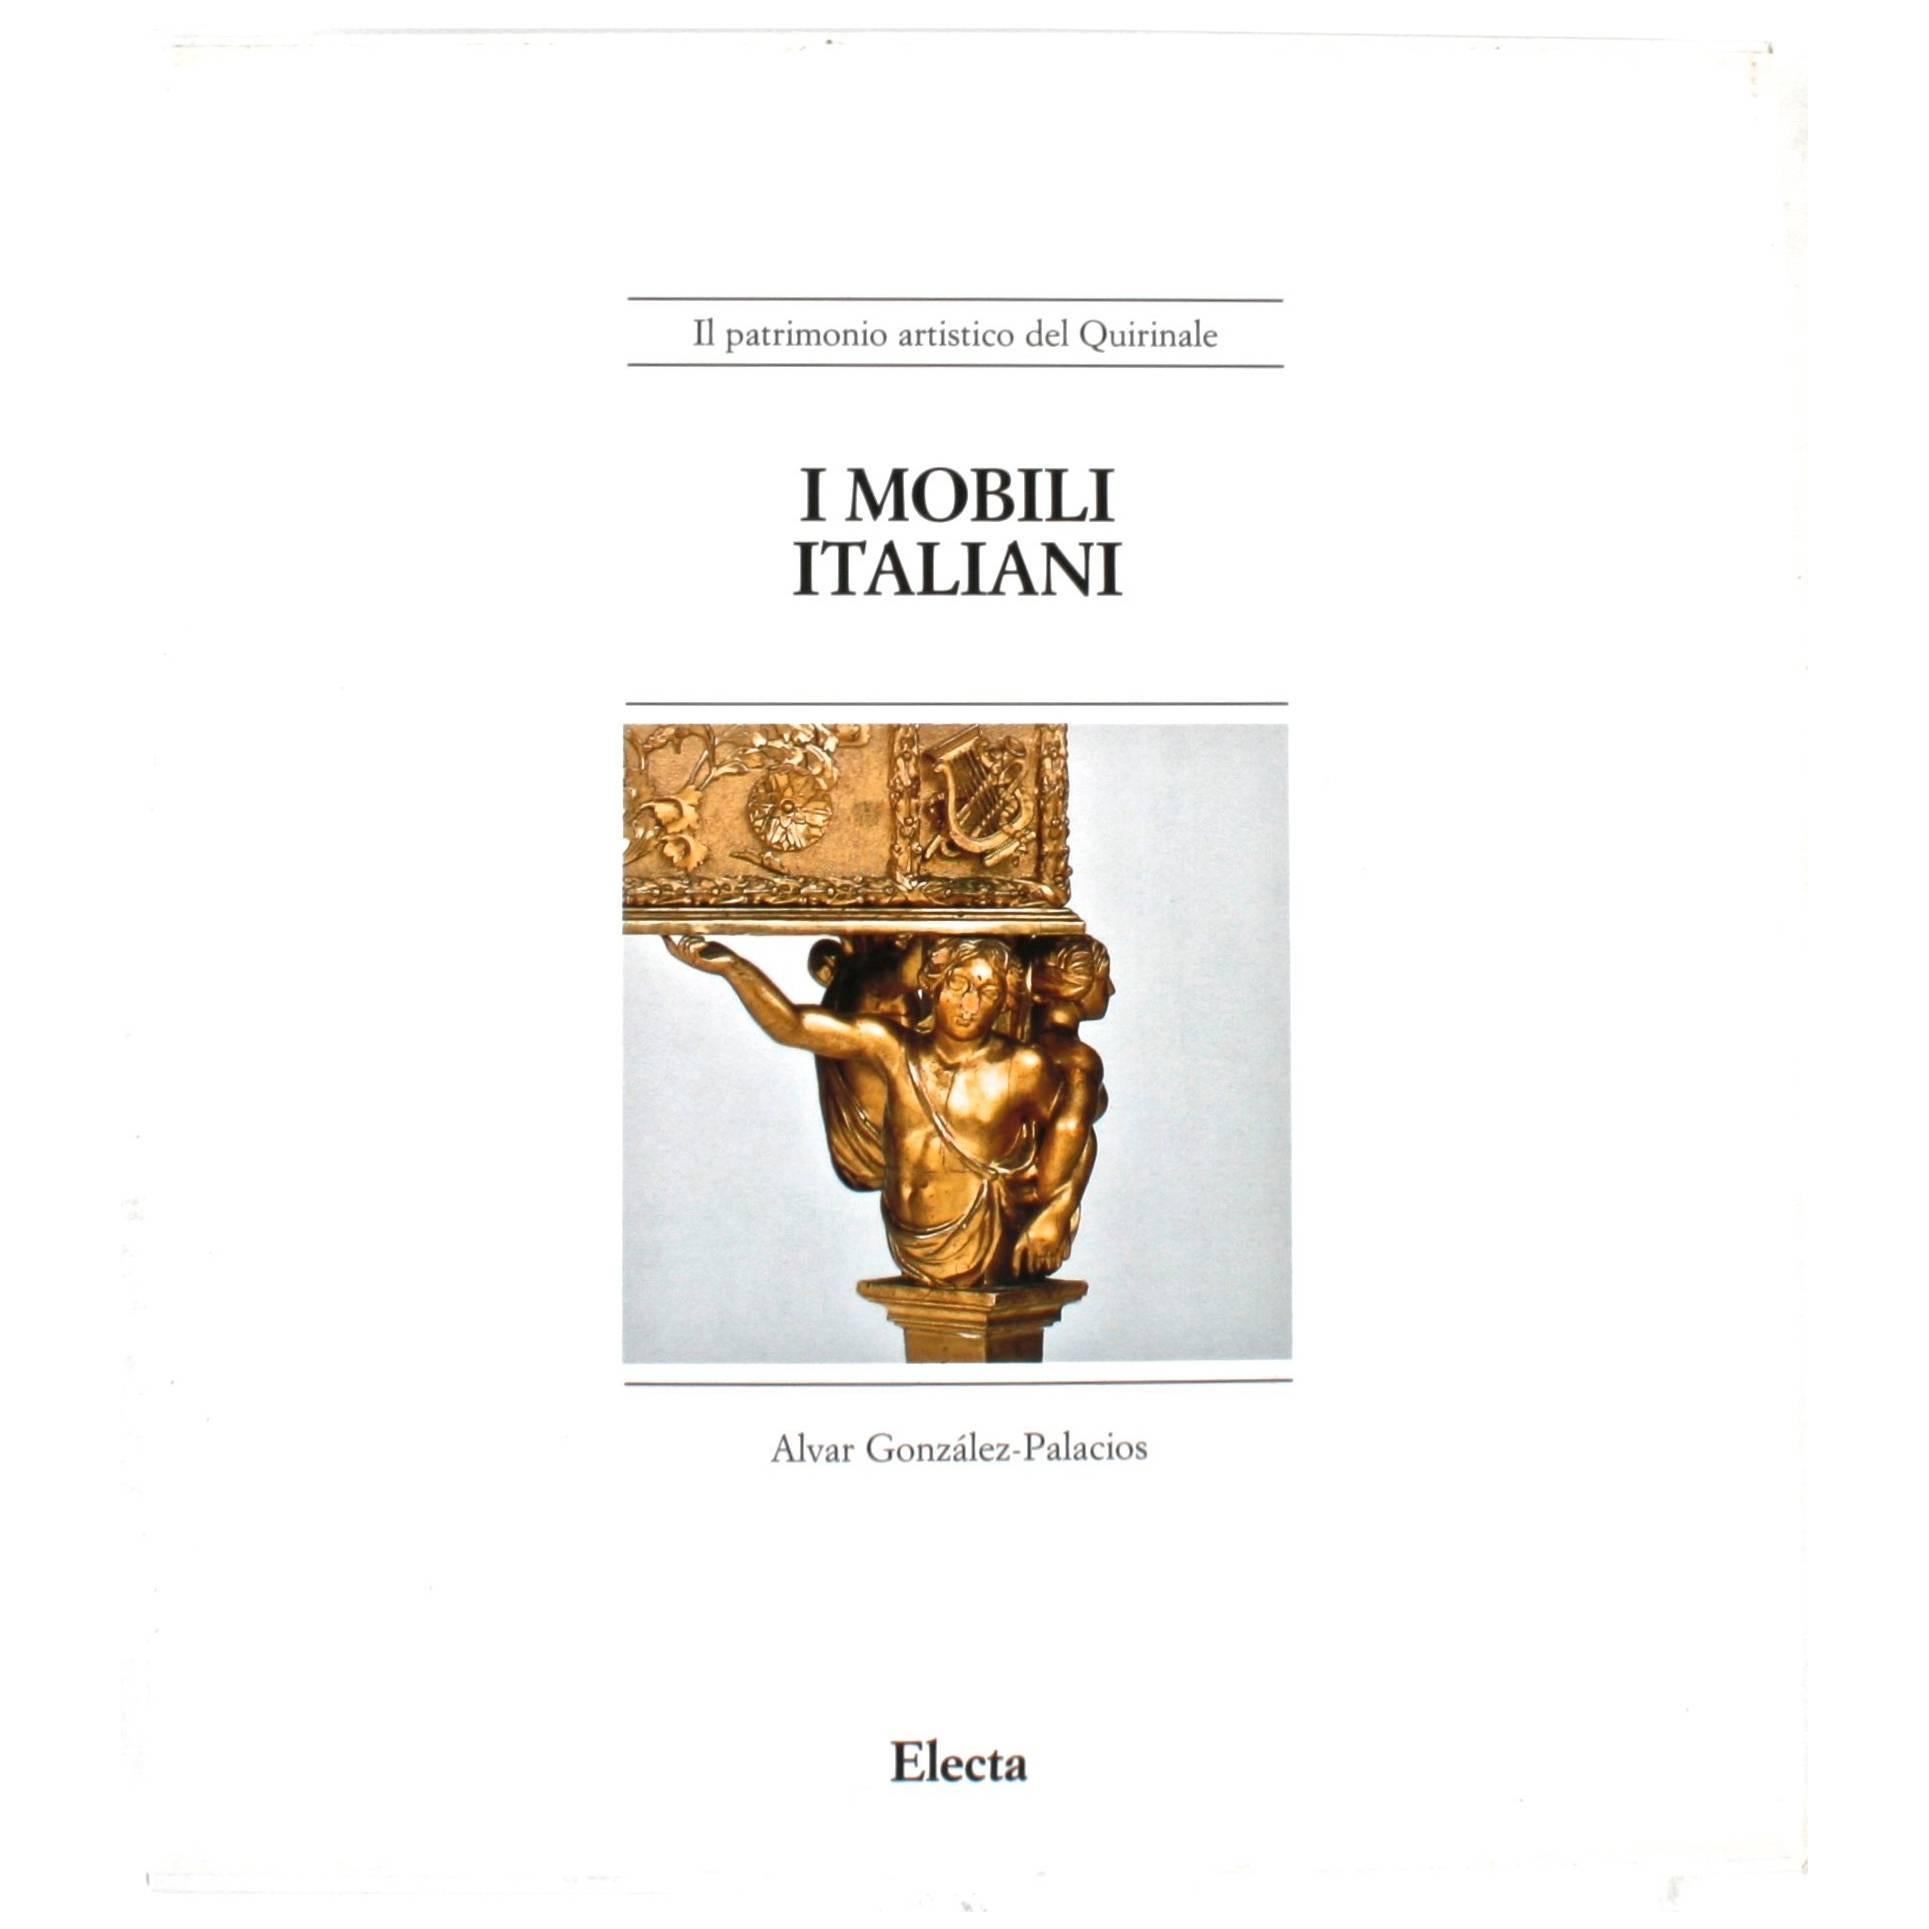 I Mobili Italiani by Alvar Gonzalez-Palacios, First Edition